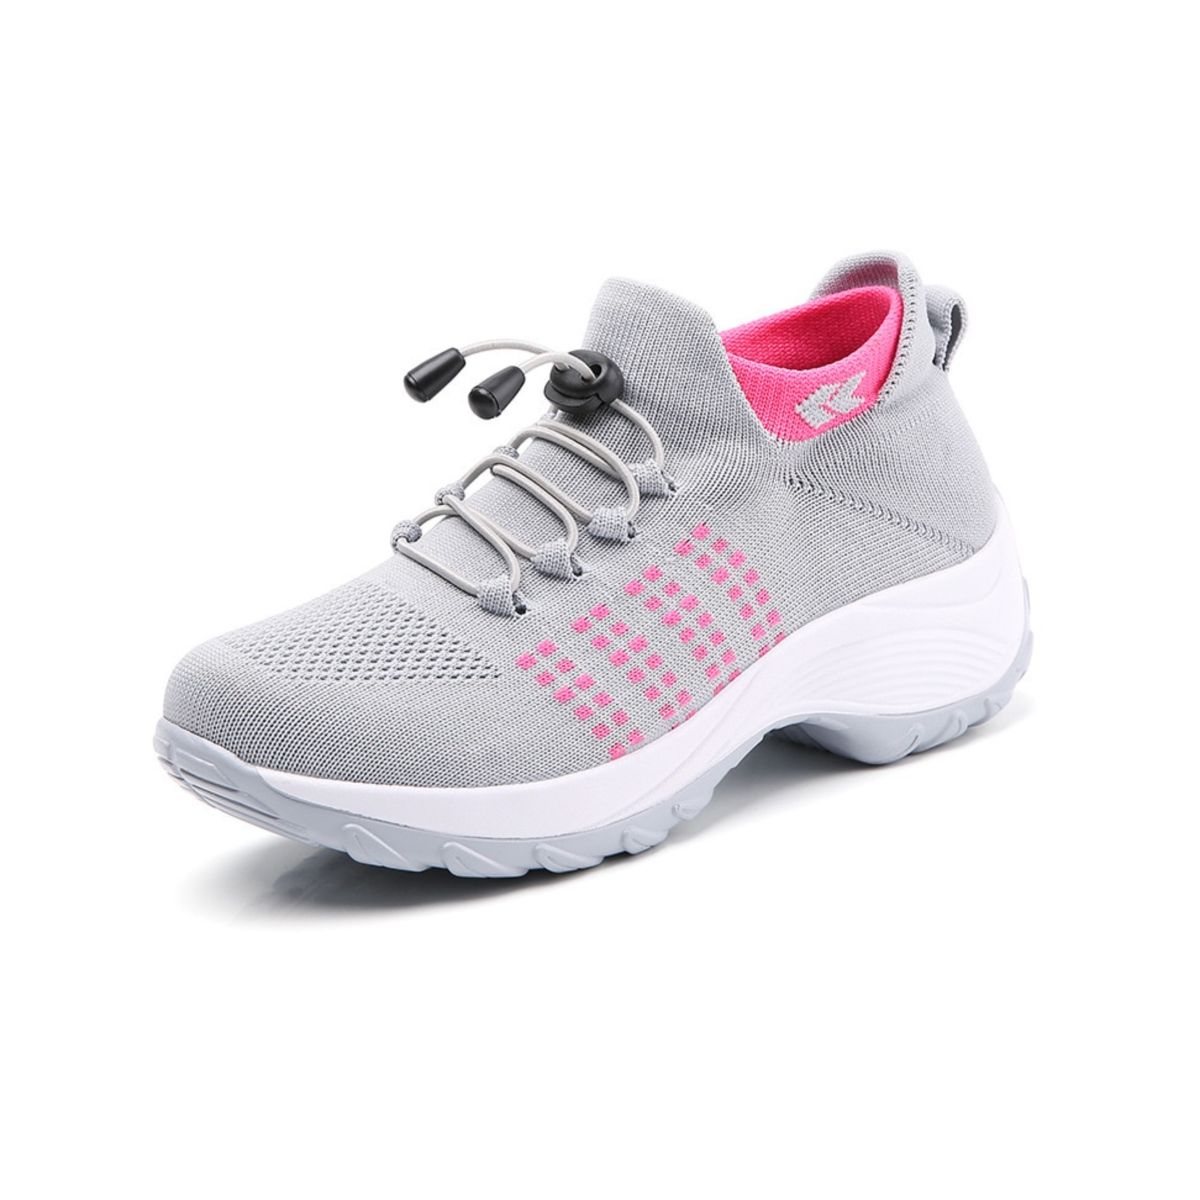 ComforthoFit Cloud Pro - Innovative Pain Relief Footwear